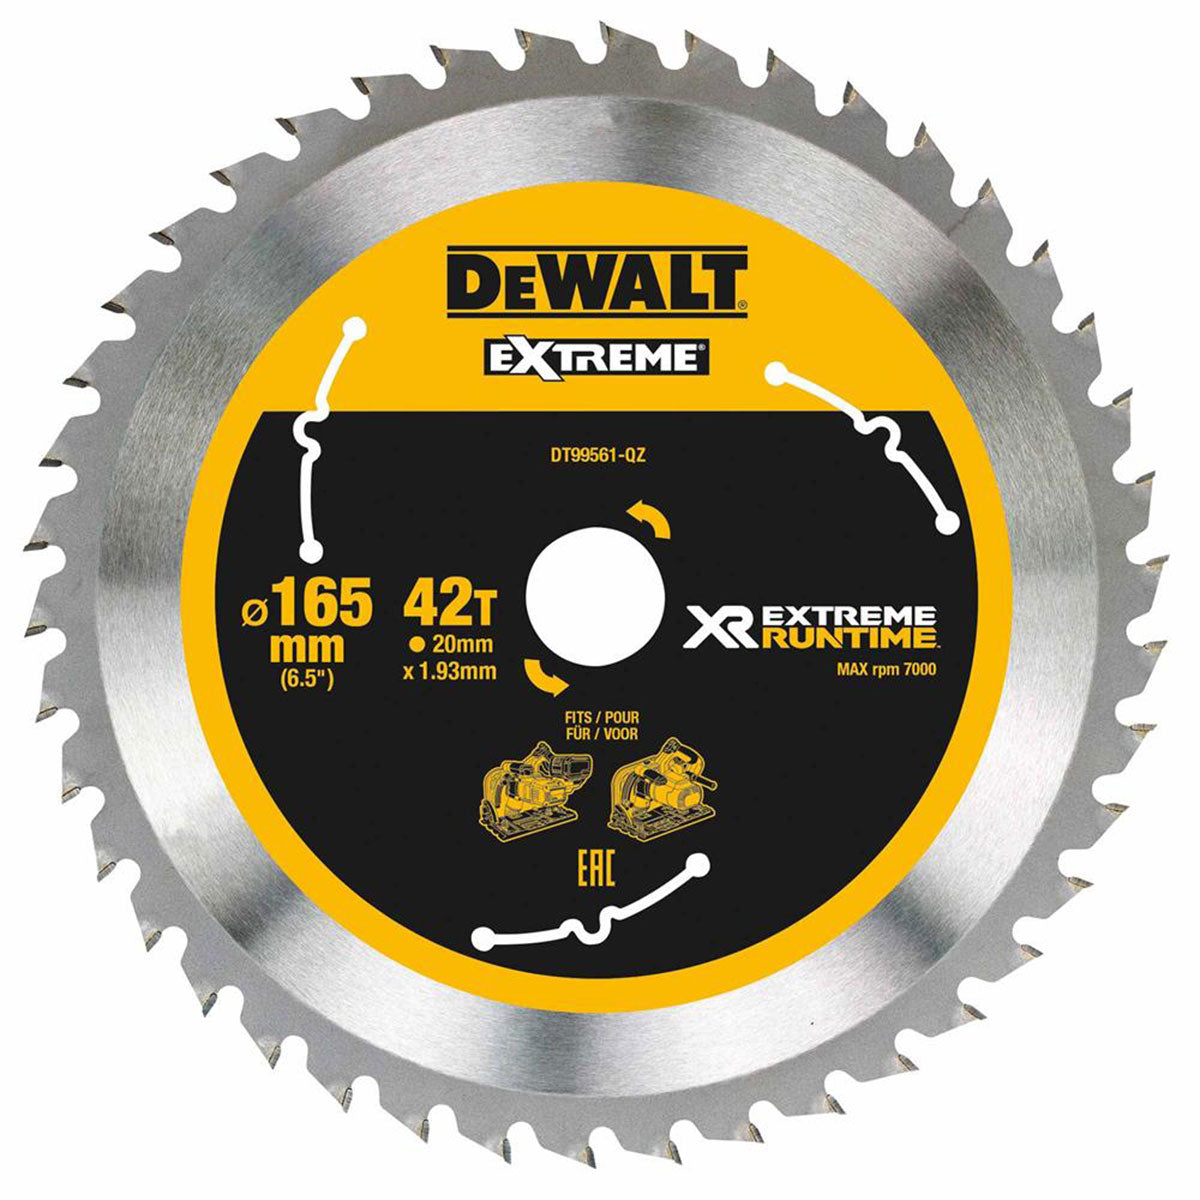 Dewalt DT99561-QZ 165mm 42T Extreme Runtime Circular Saw Blade